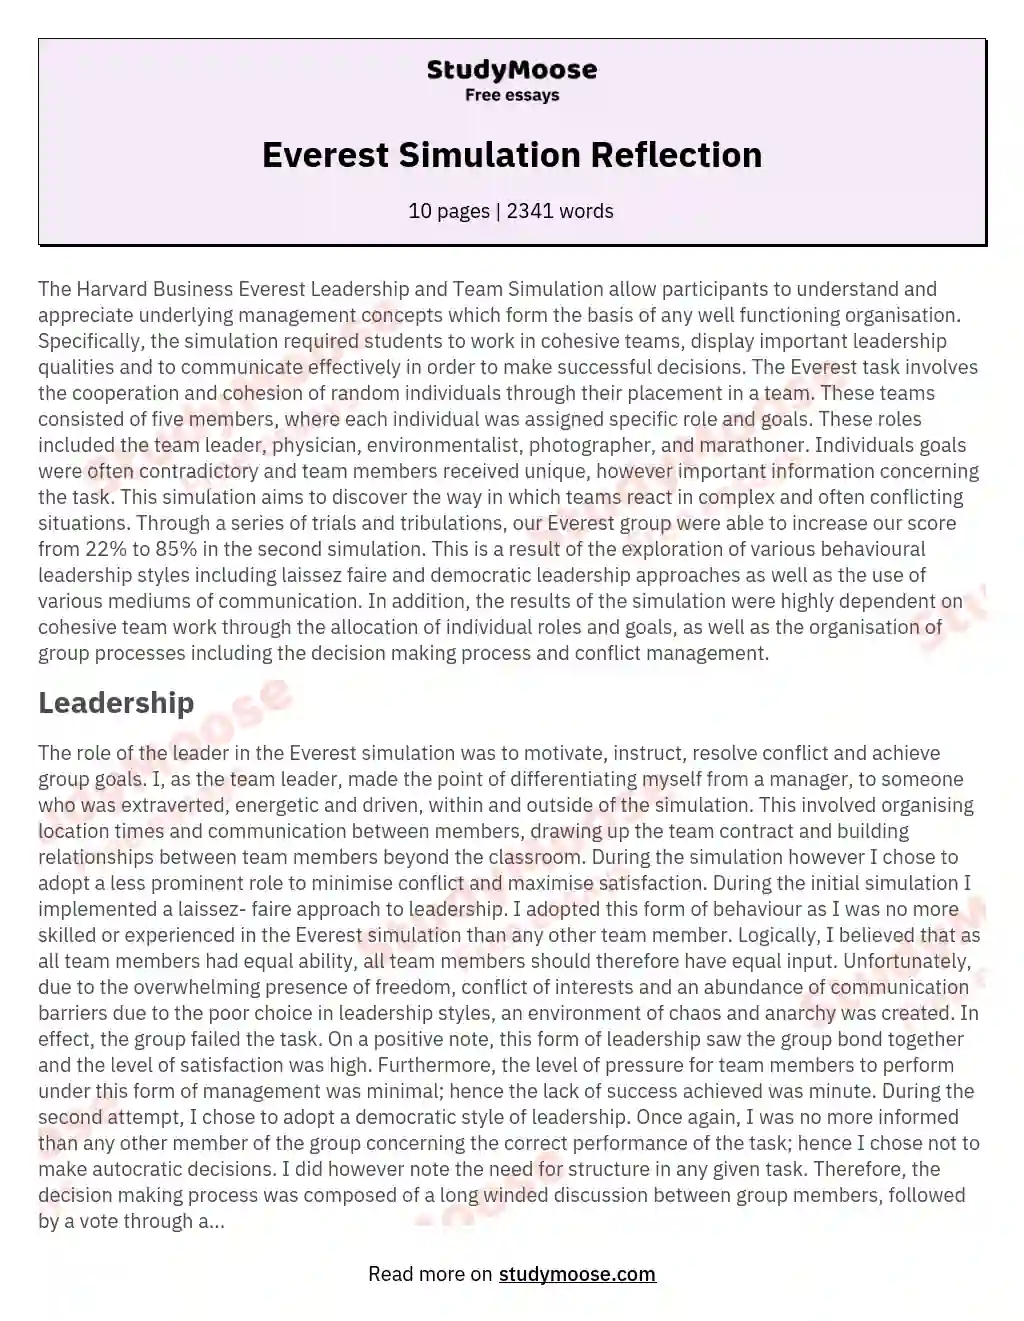 Everest Simulation Reflection essay